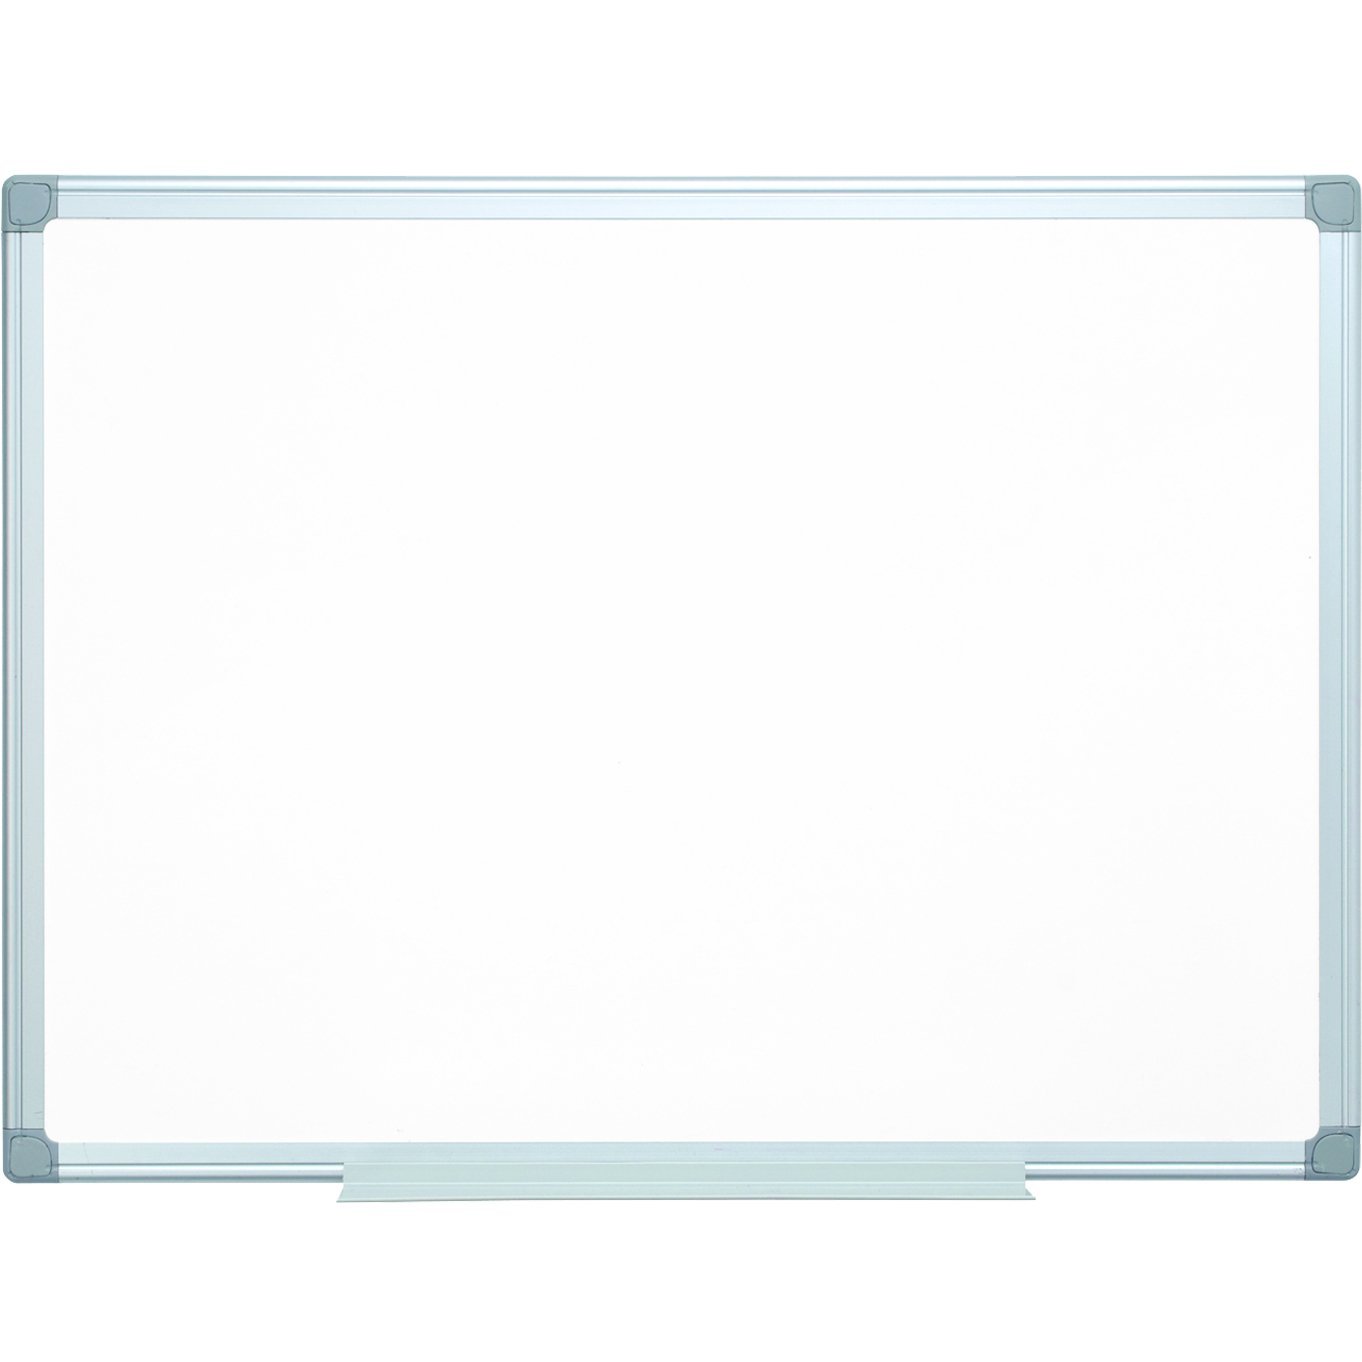 Q-connect lakeret whiteboardtavle 600 mm x 900 mm, Stål/Aluminium